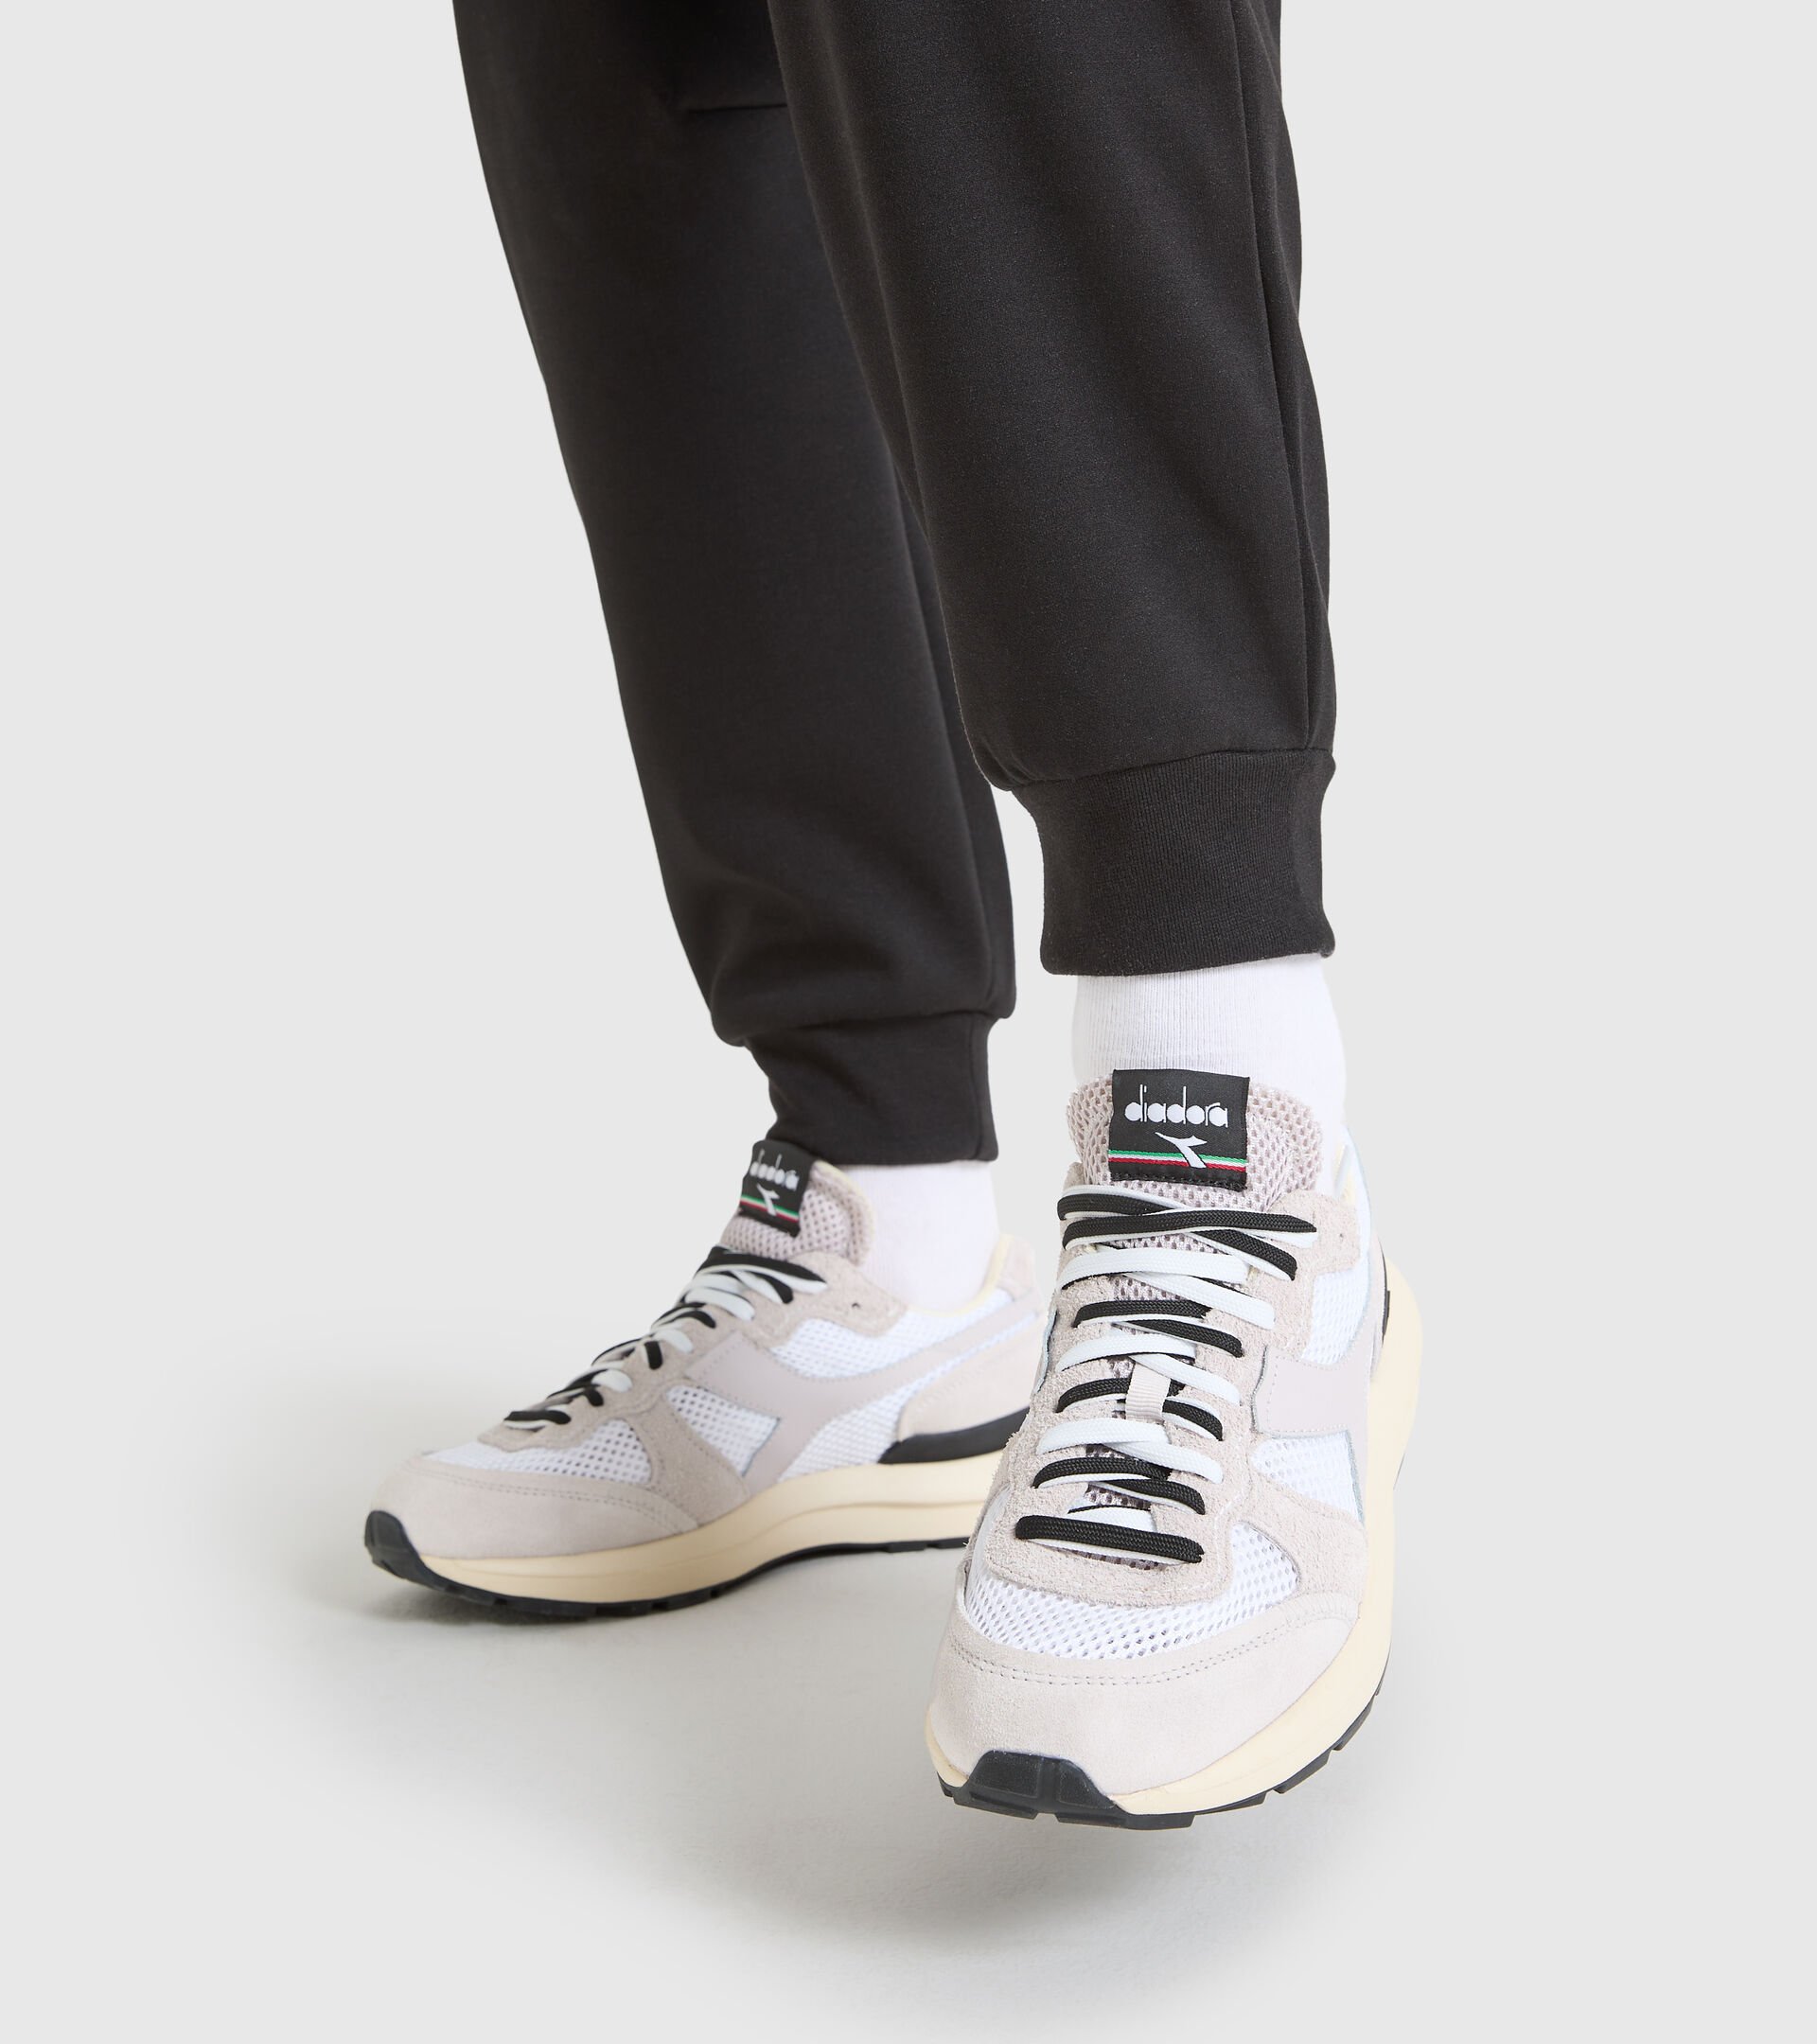 Sports shoes - Unisex KMARO 42 SUEDE MESH WIND GRAY/WHITE - Diadora